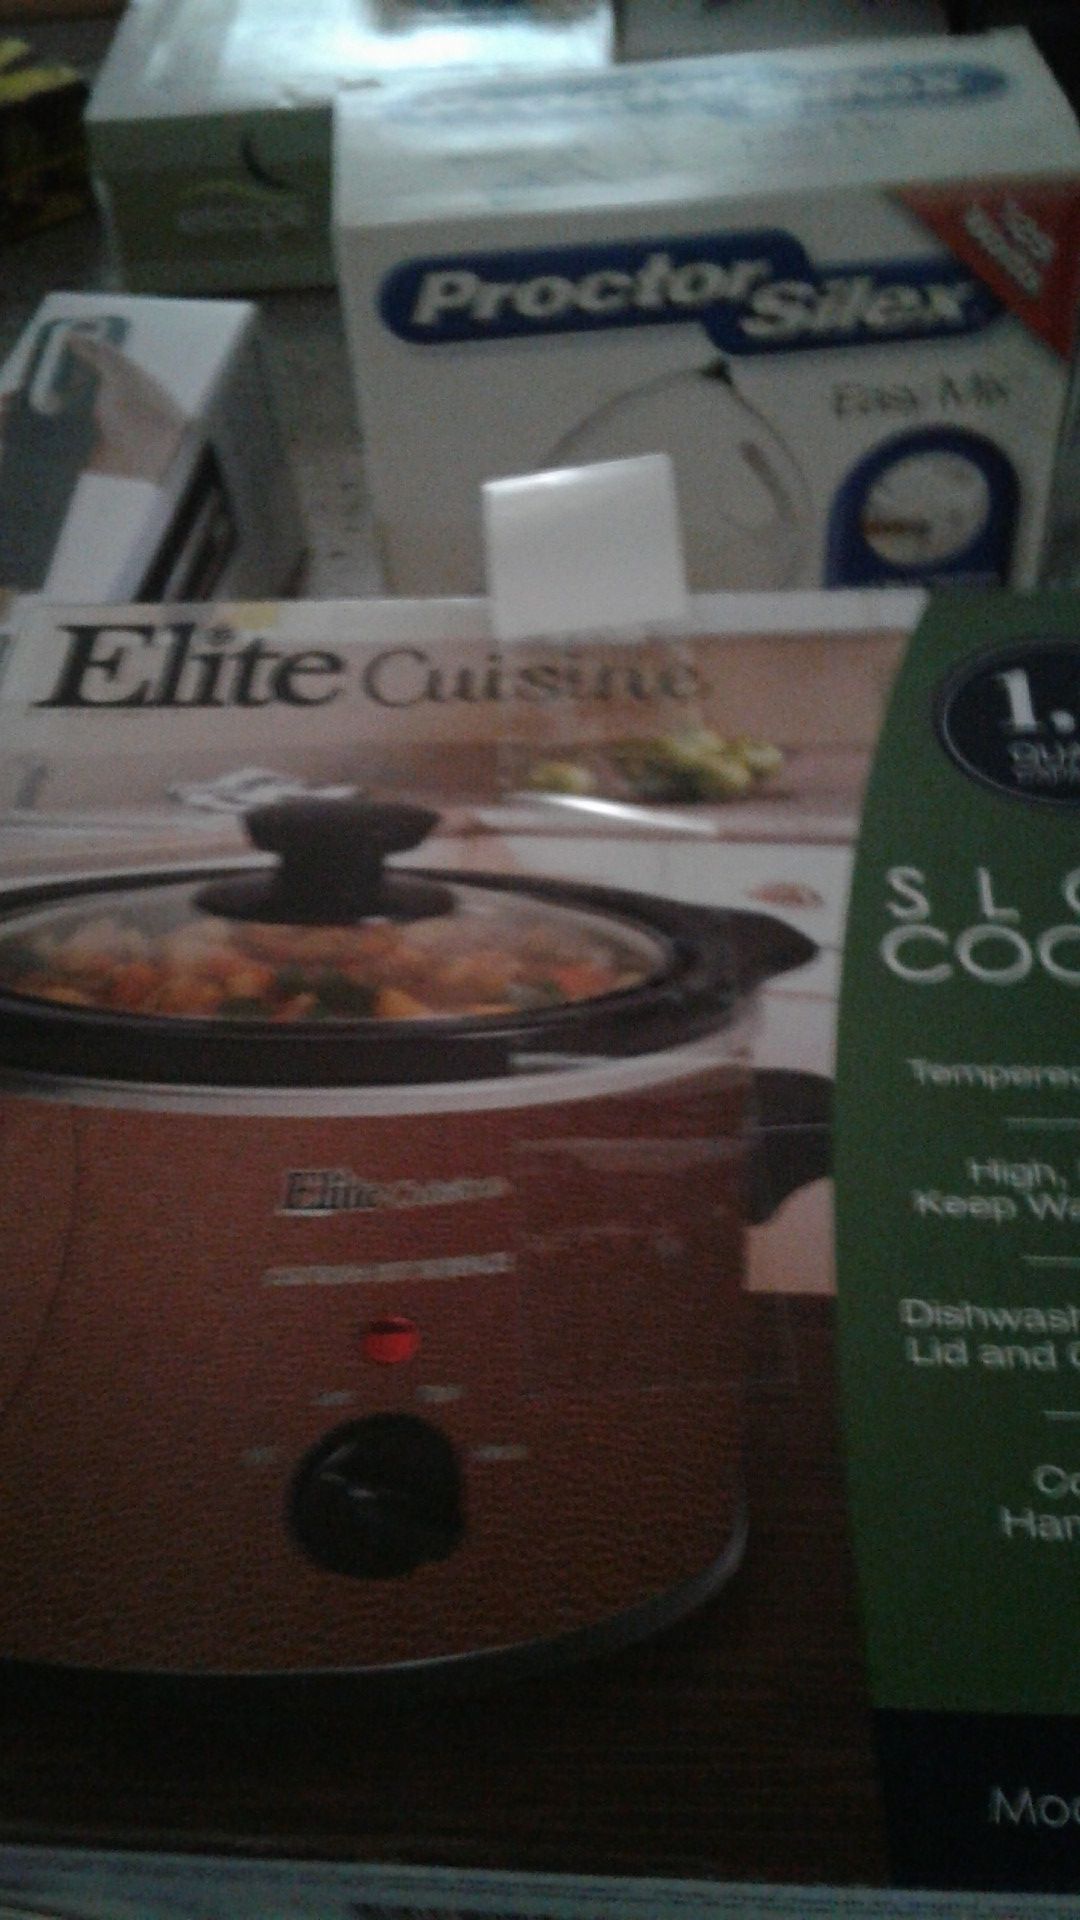 Elite cuisine 1.5 quart slow cooker